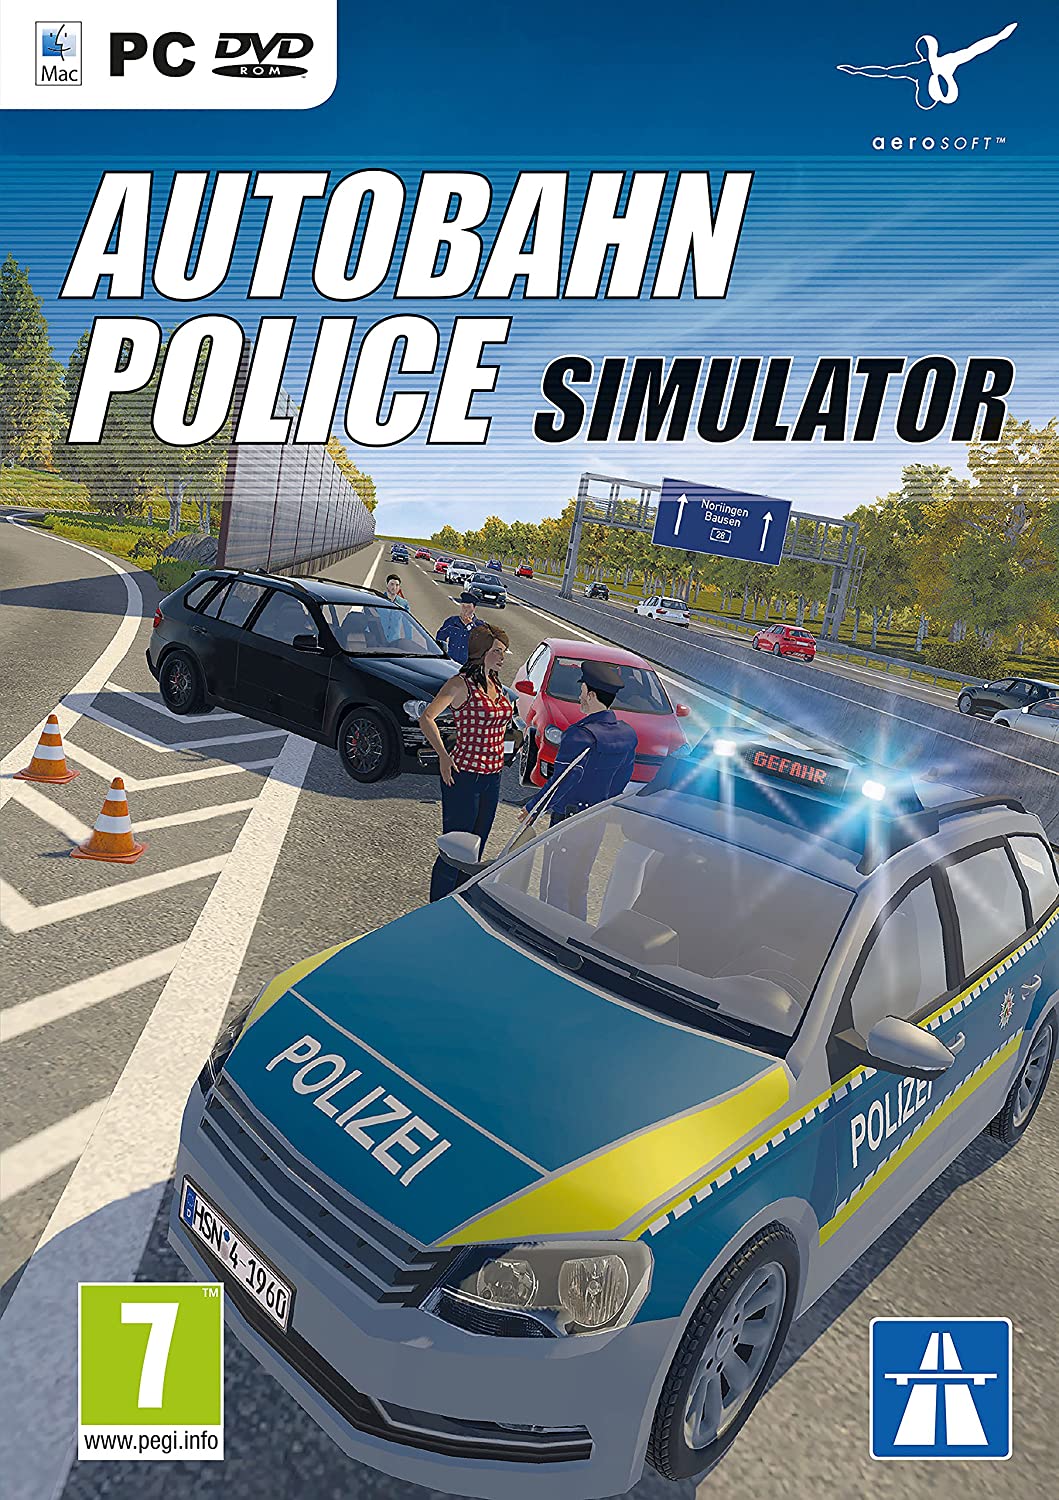 autobahn police simulator 2 ps4